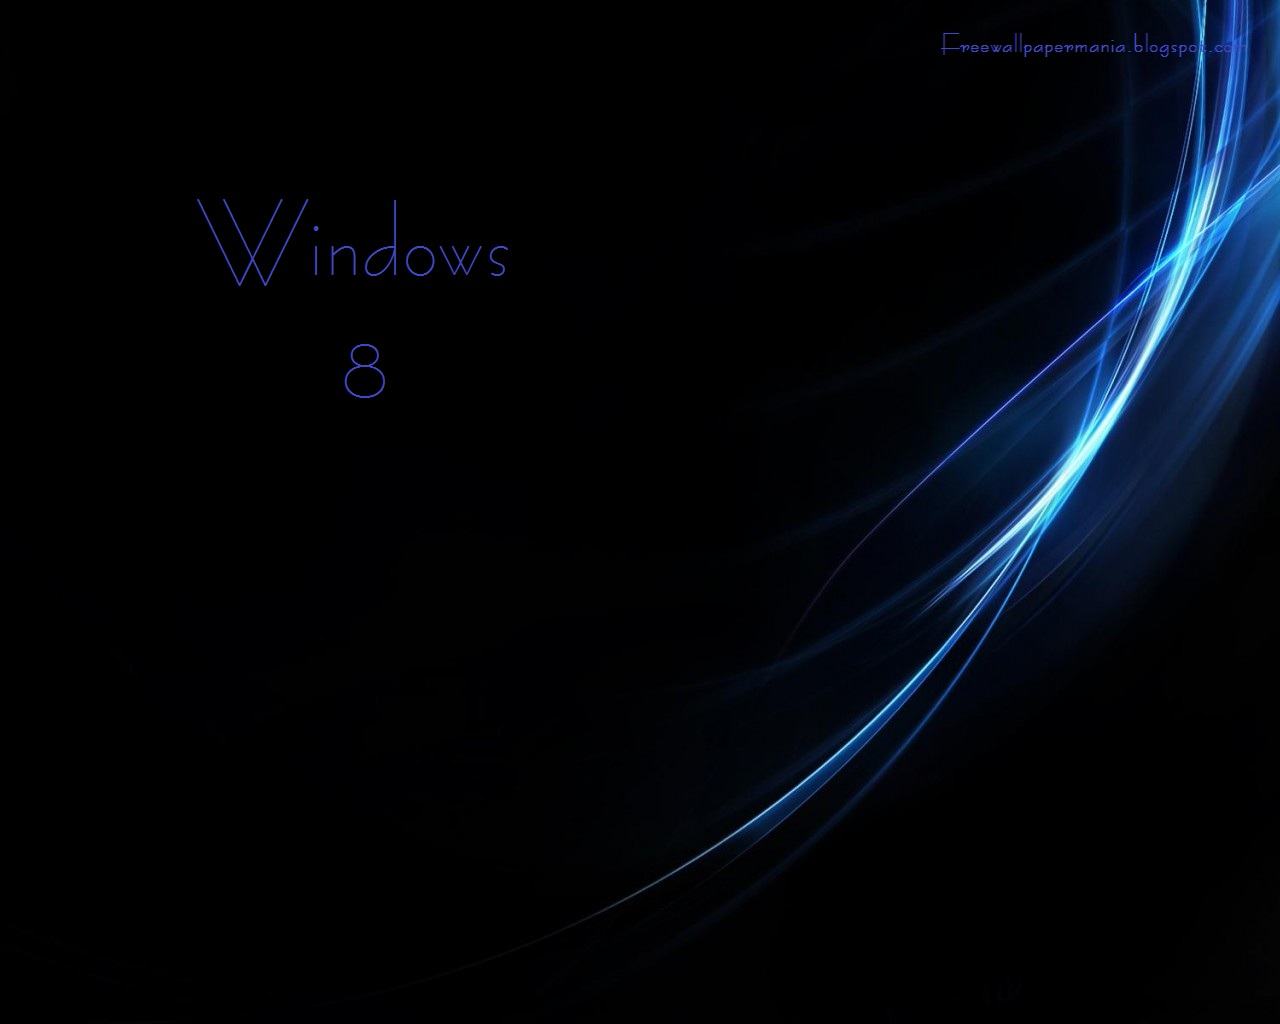 Windows HD Wallpaper Background 13k